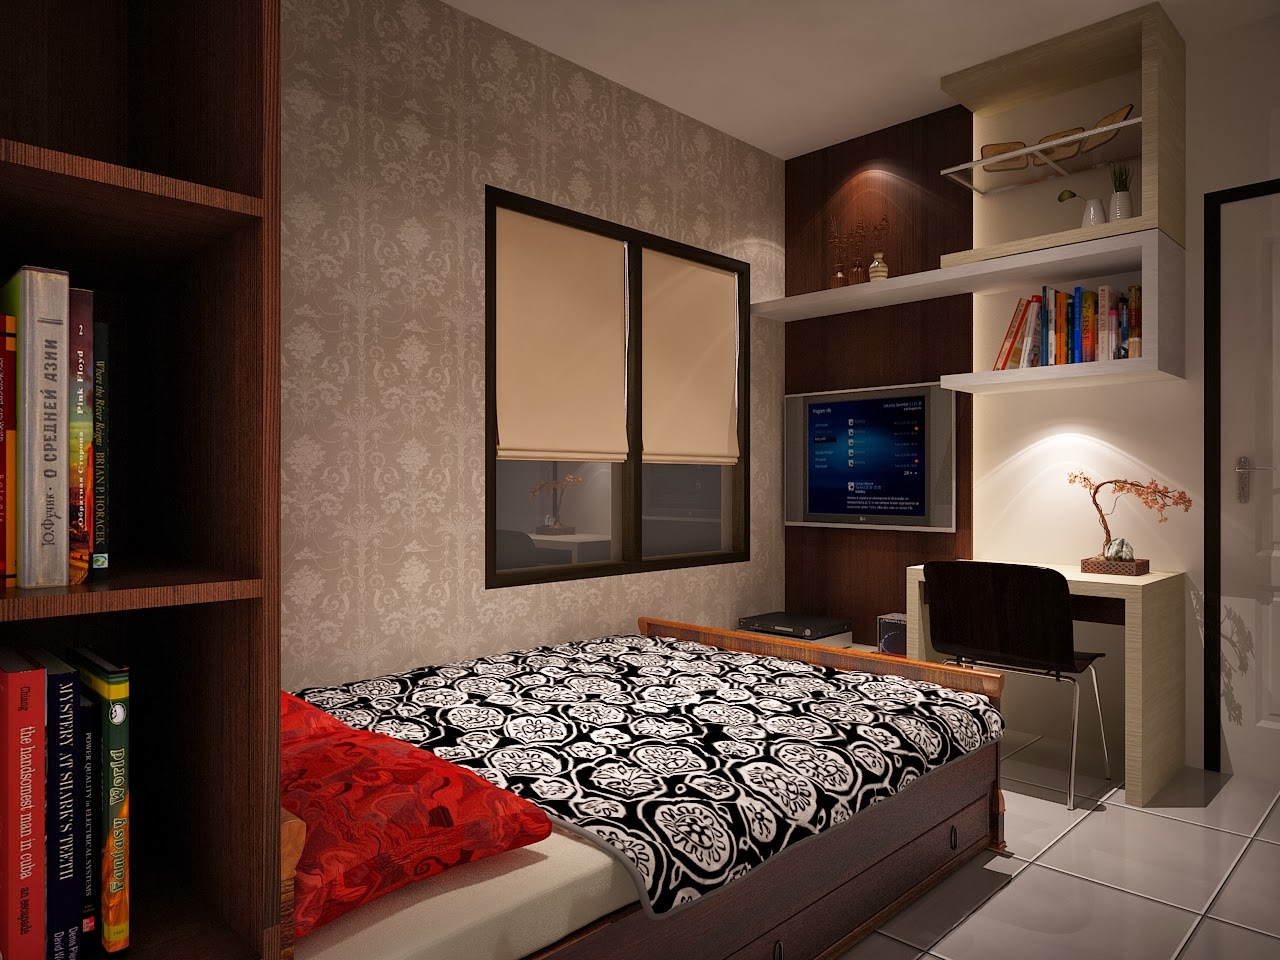  Desain  Interior Apartemen  1 kamar Tidur Interior Desain  